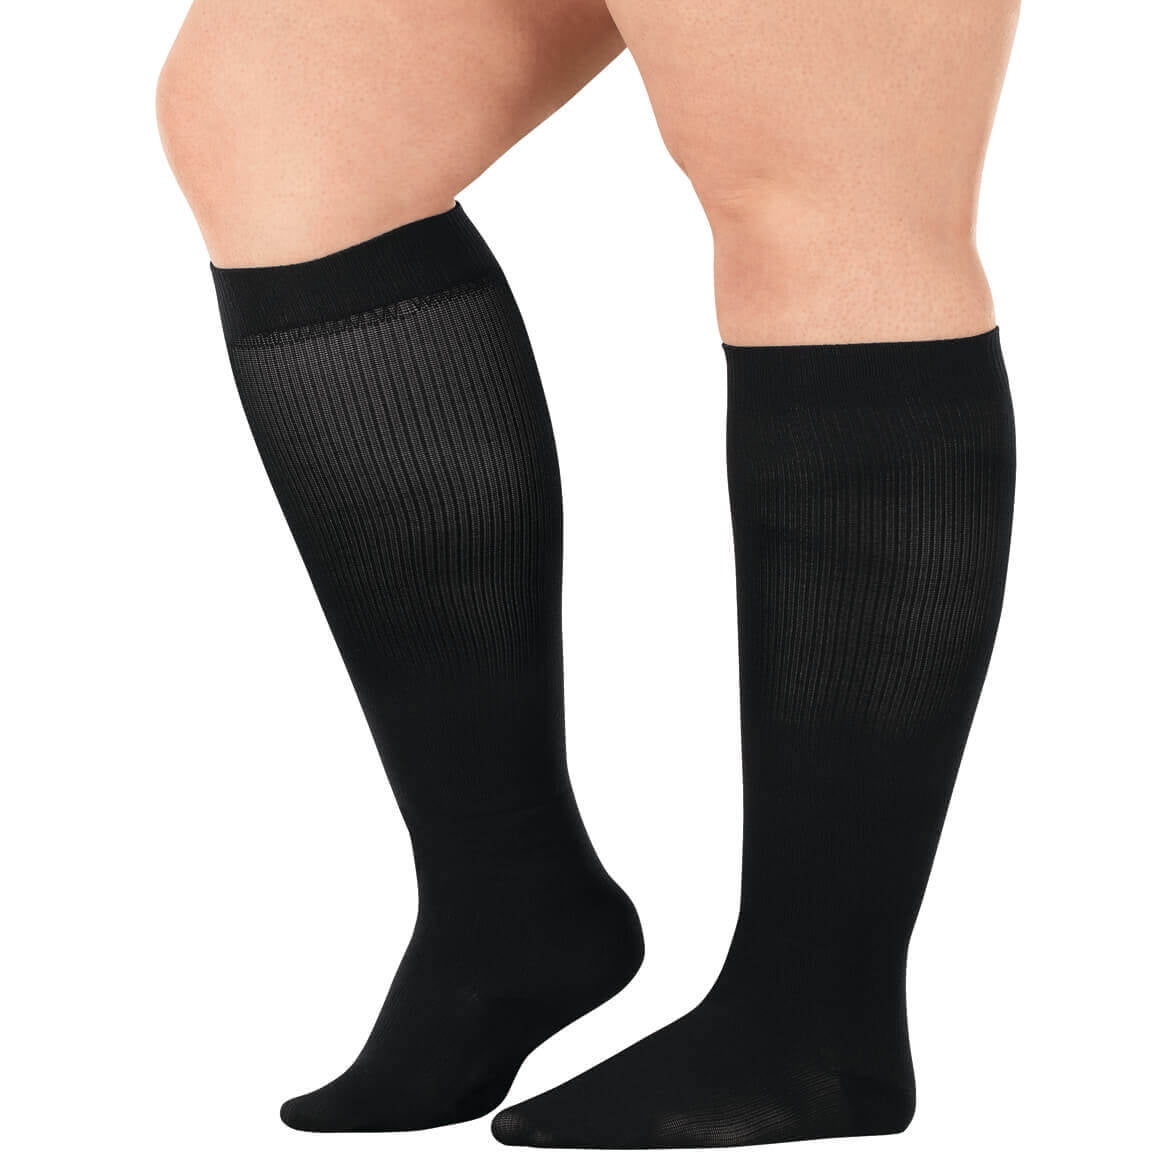 Black Solid 8-15 mmHg Graduated Compression Sock 